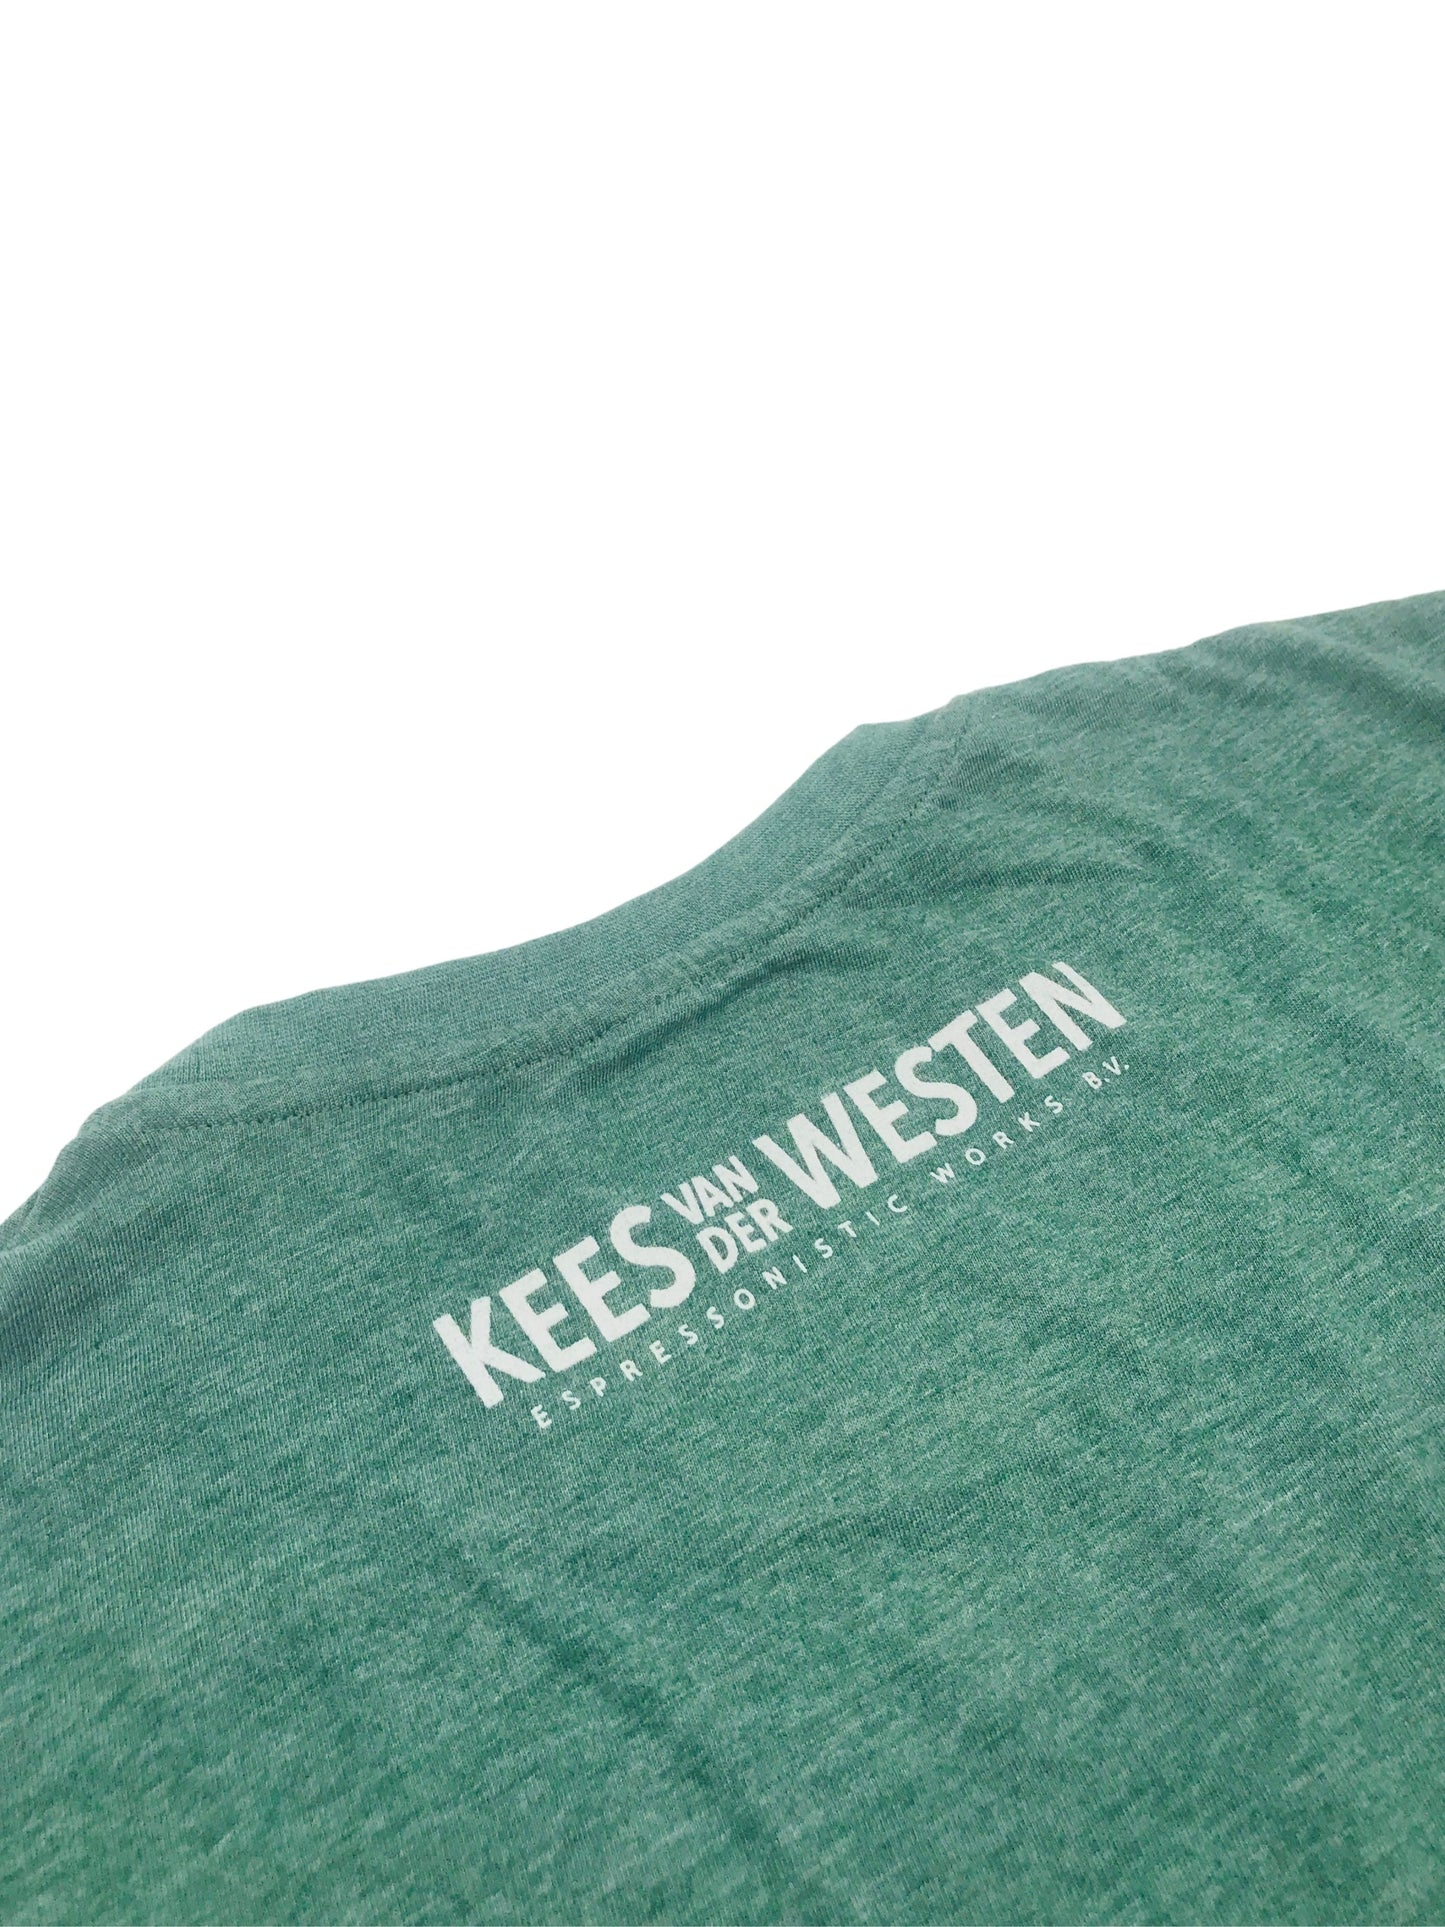 KVDW - Merchandise, "Slim Jim" T-shirt Green